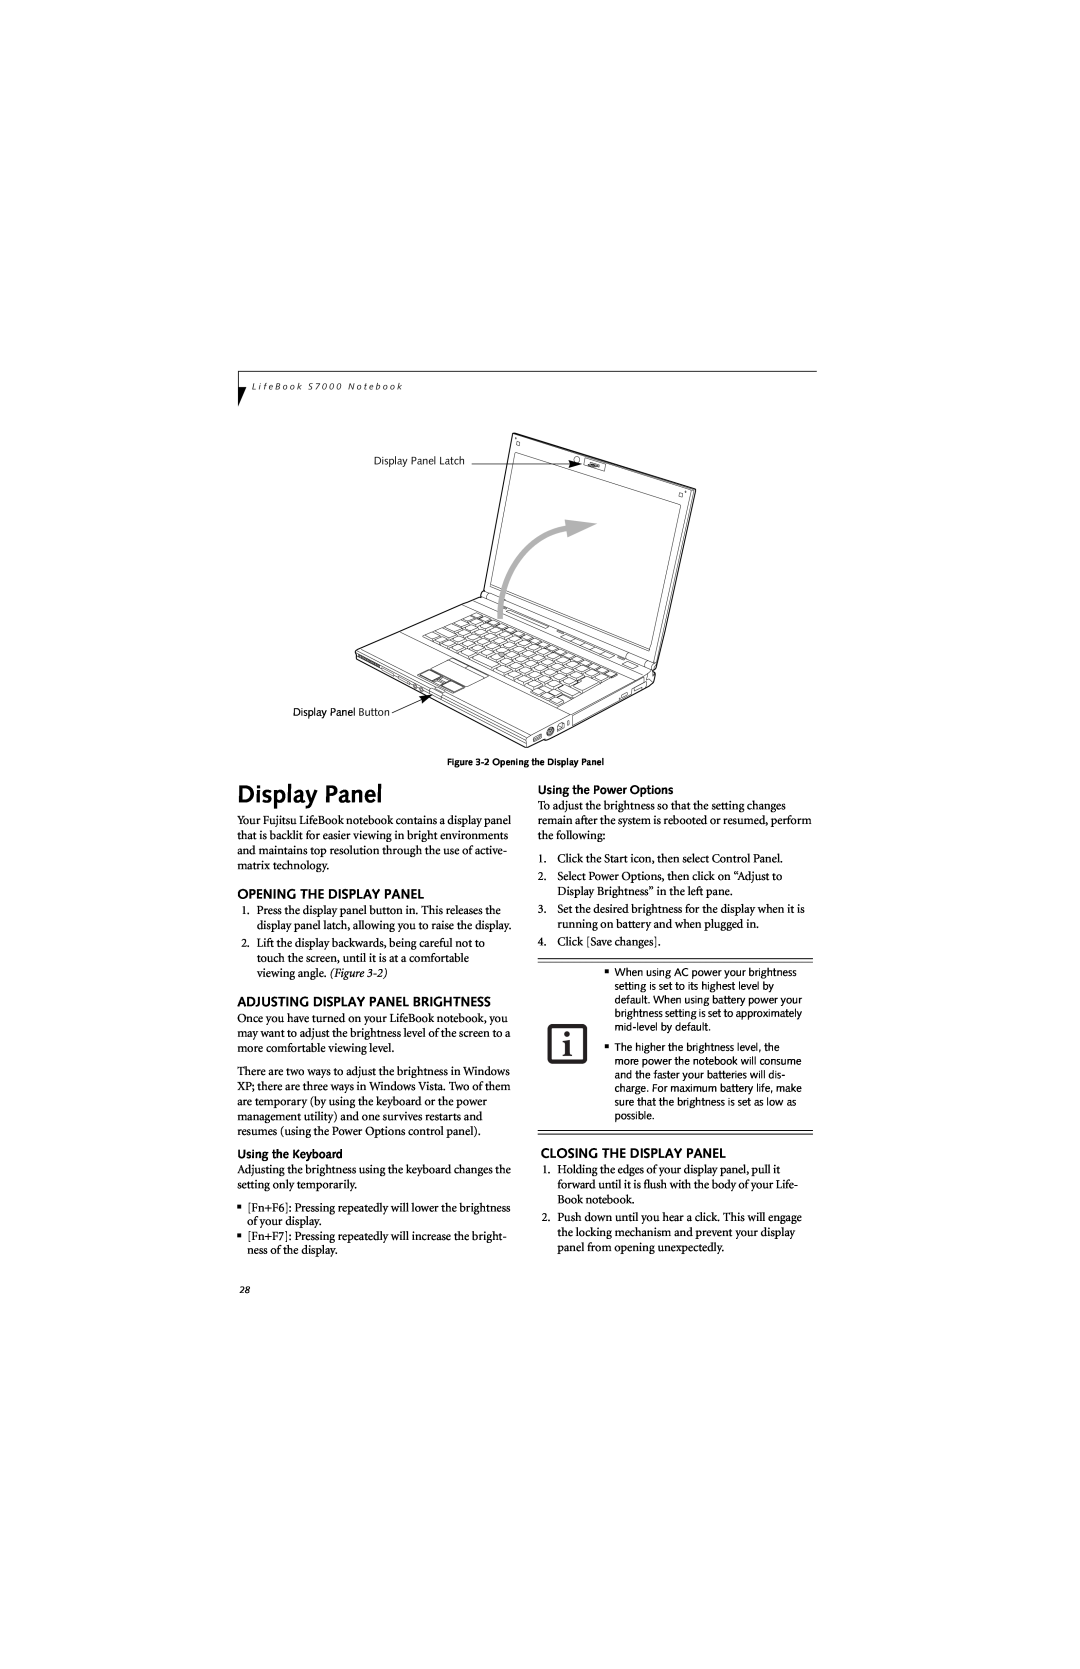 Fujitsu S7210 manual Opening The Display Panel, Adjusting Display Panel Brightness, Closing The Display Panel 